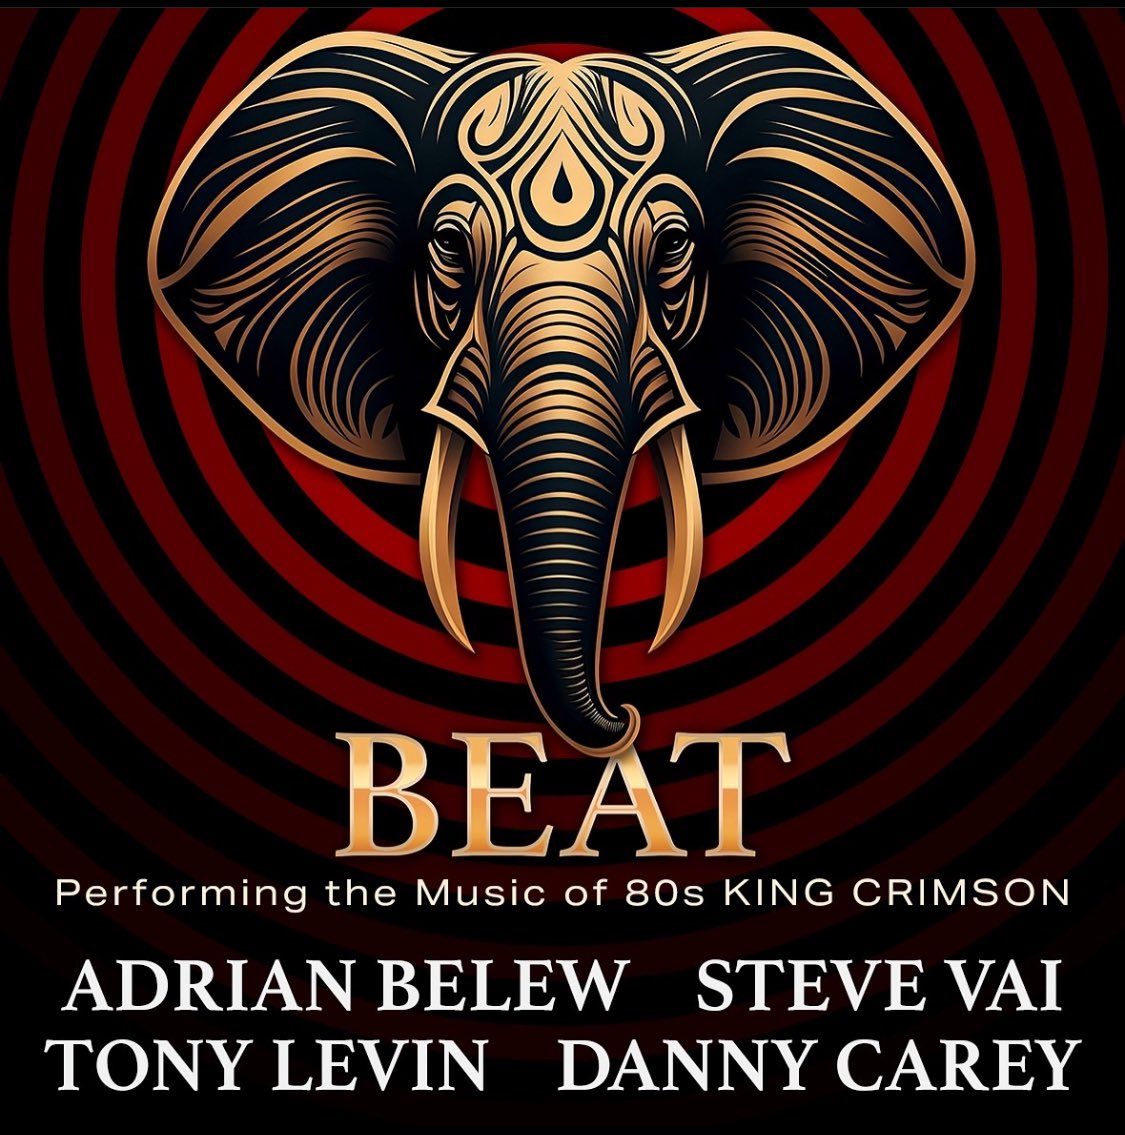 I got my ticket! 

#BeatTour 
#AdrianBelew
#SteveVai
#TonyLevin
#DannyCarey
#KingCrimson
#Prog